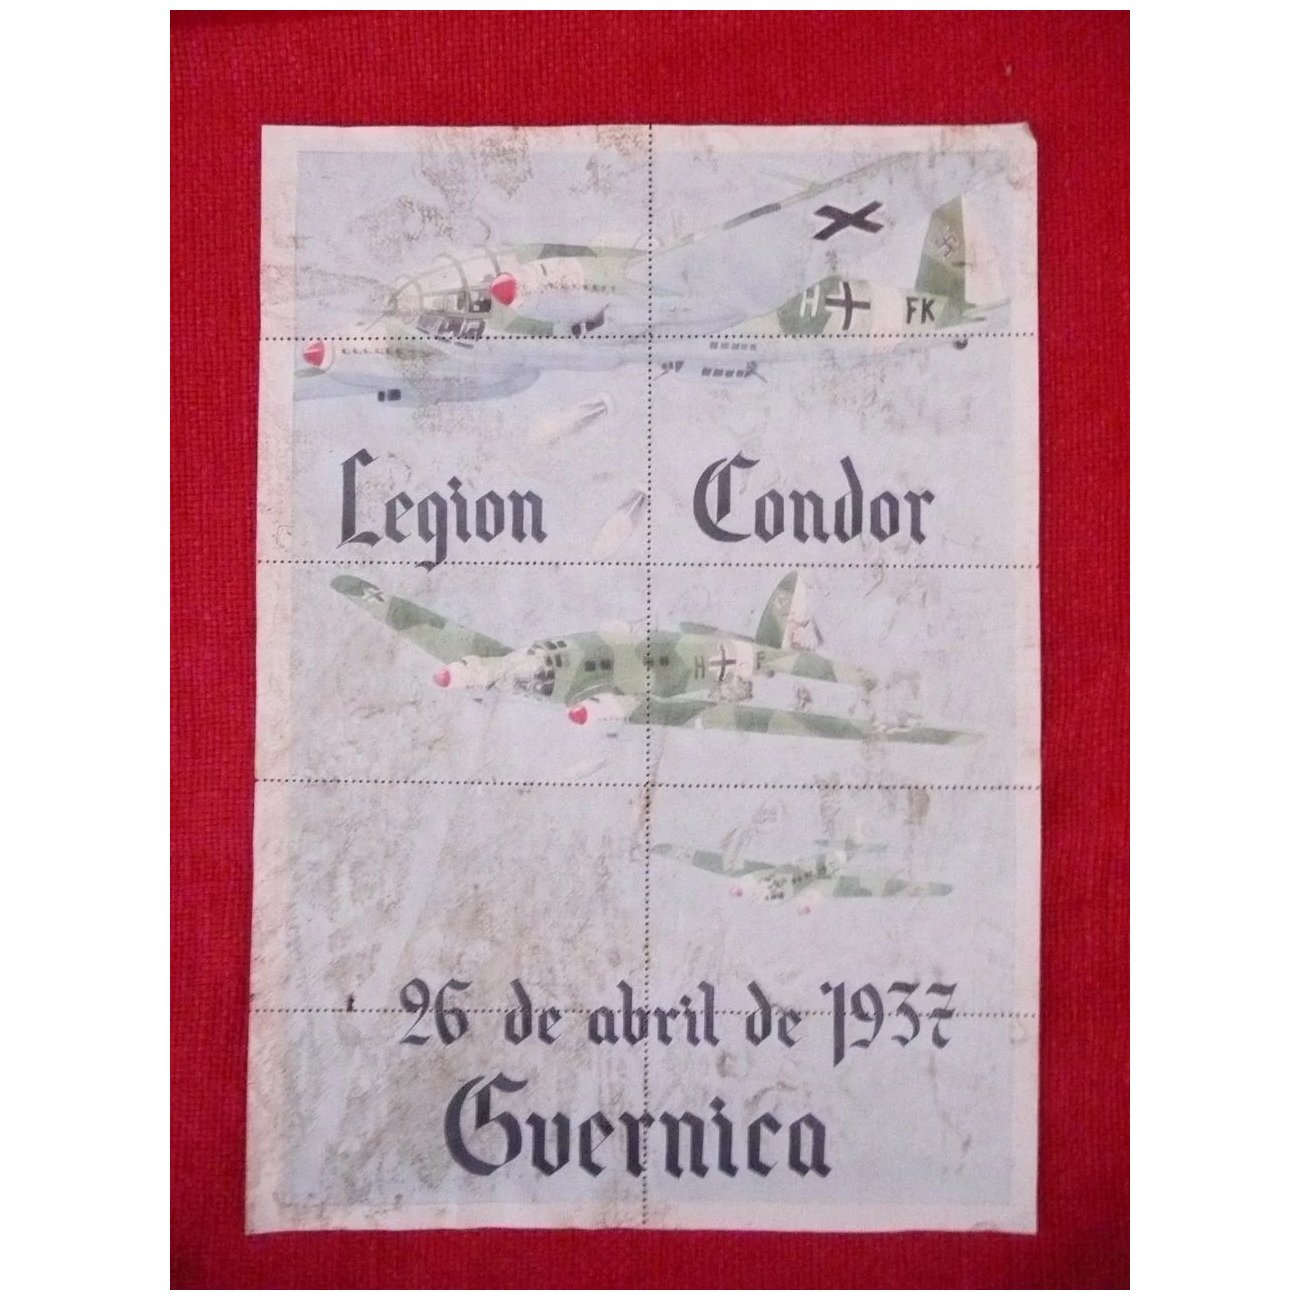 Genuine Spanish Civil War Propaganda Poster - Condor Legion Coupon Rations Sheet